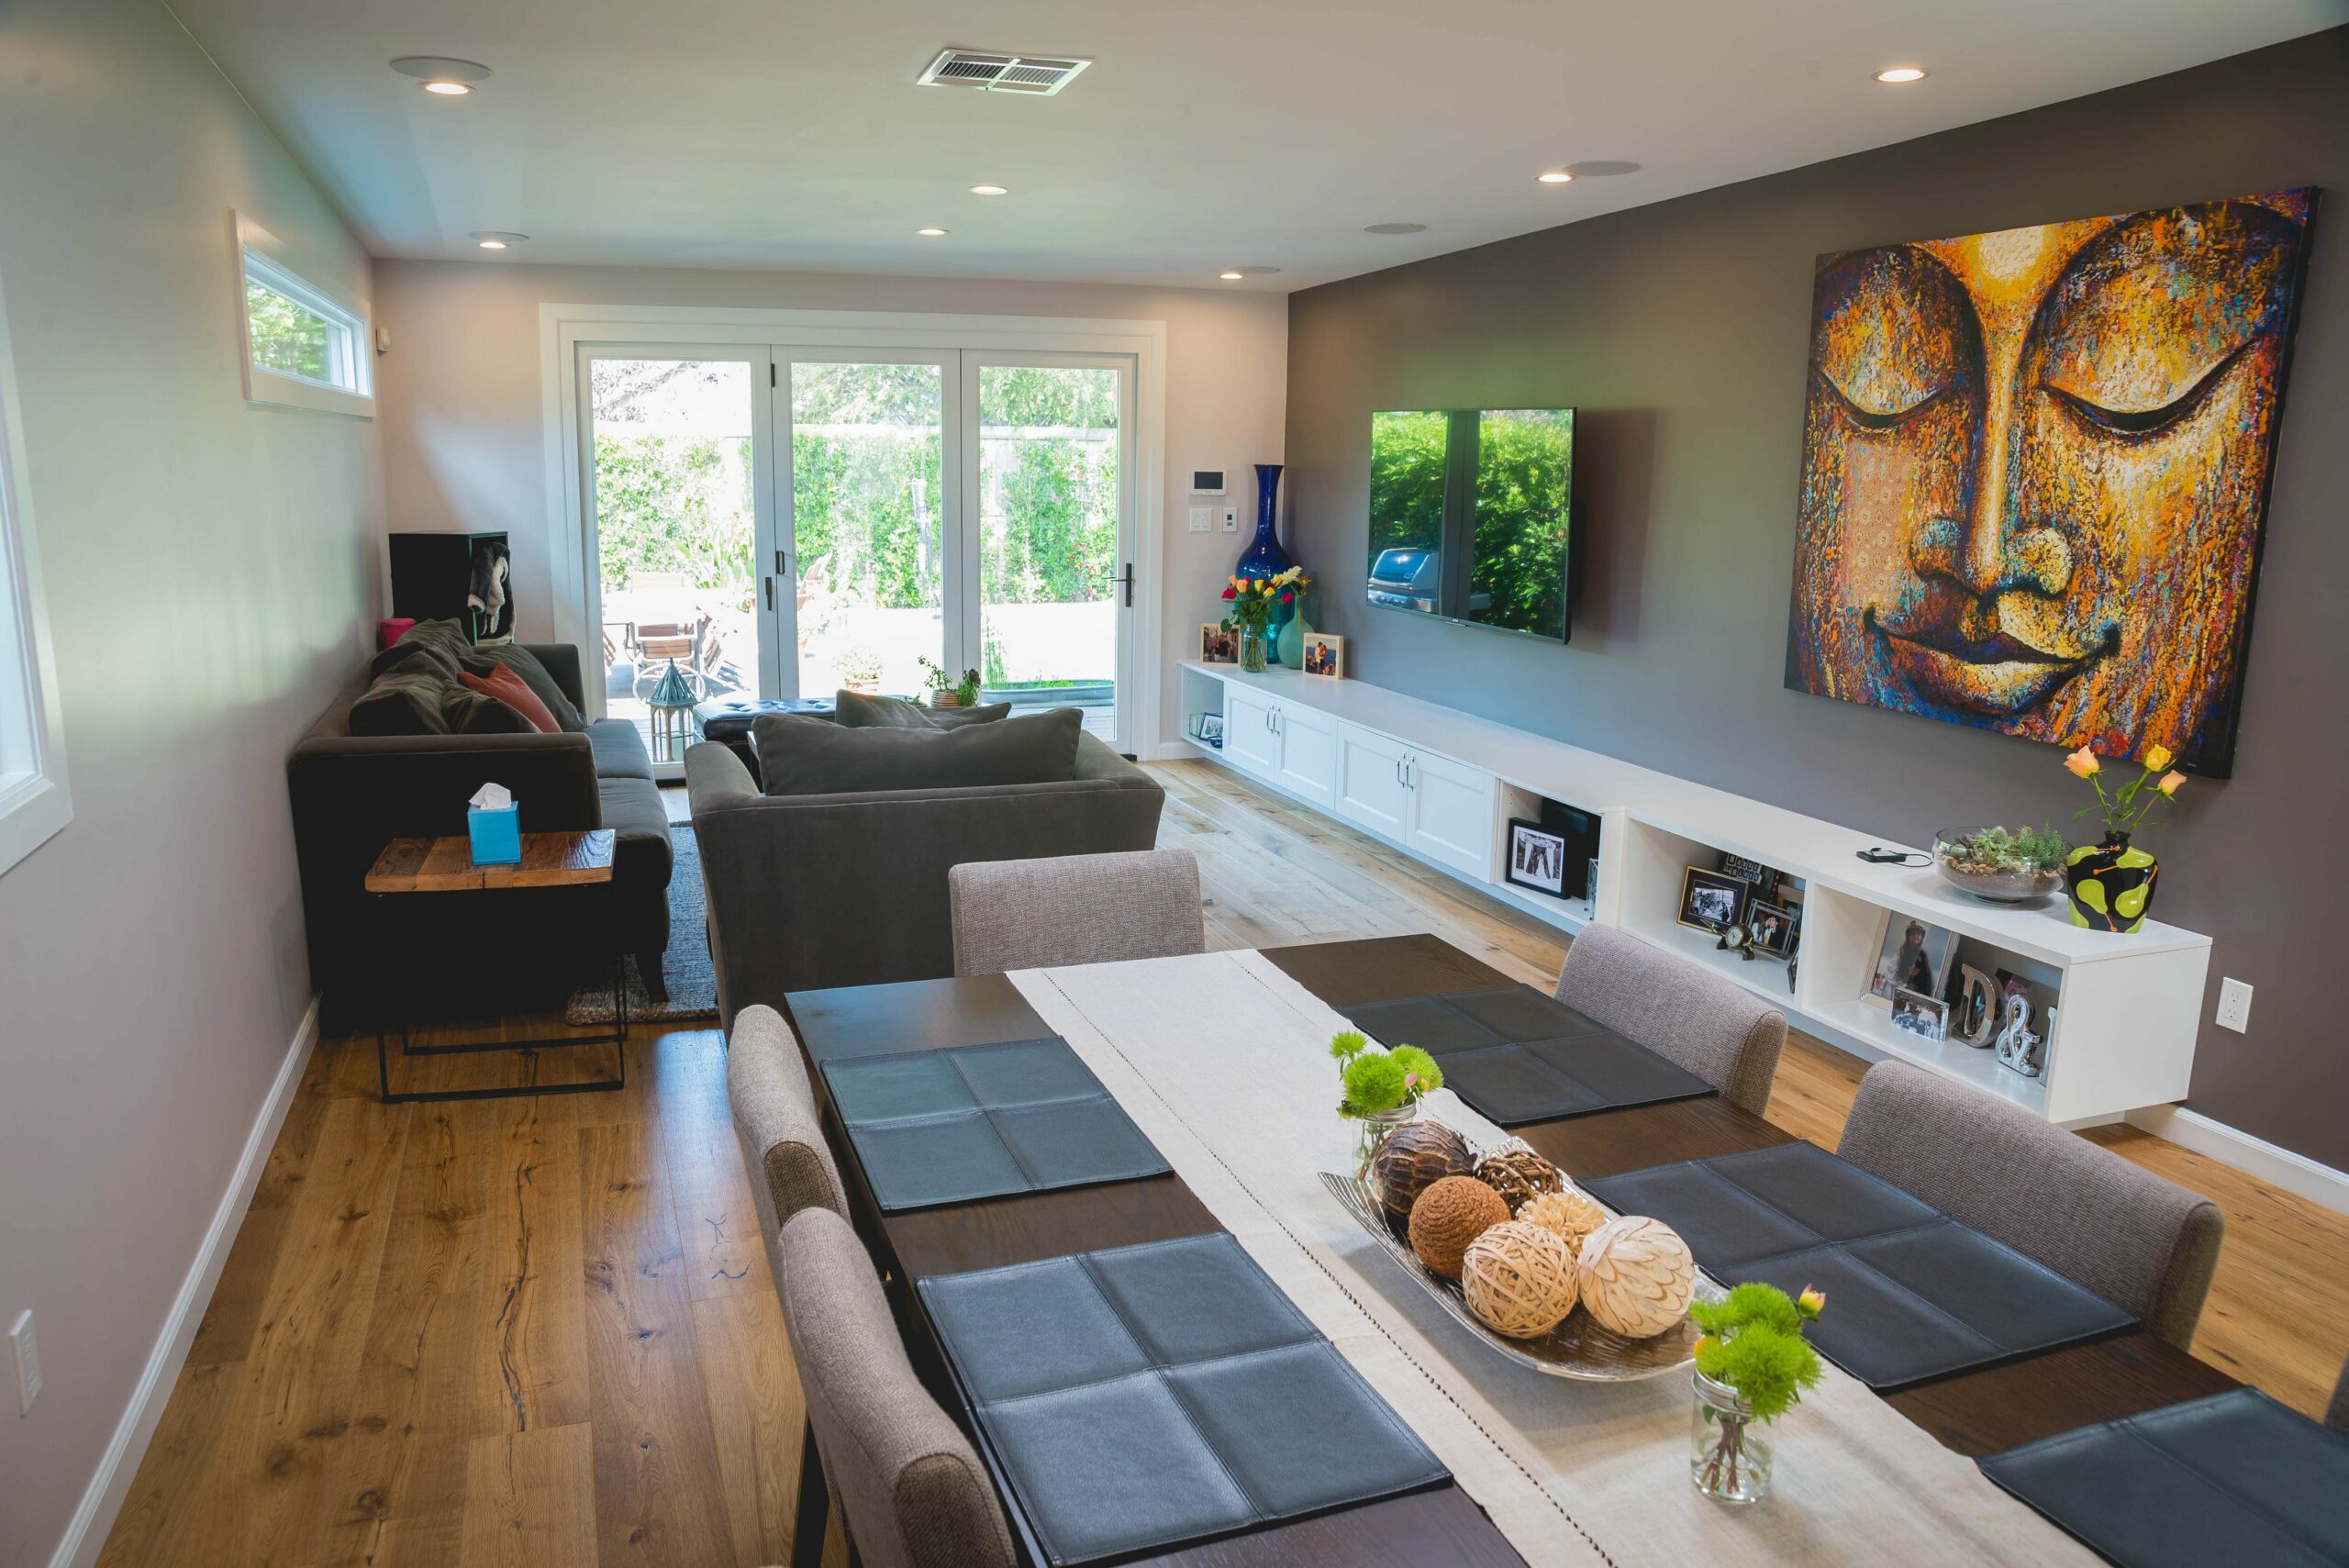 Modern living room with artwork, furniture, and hardwood floors.